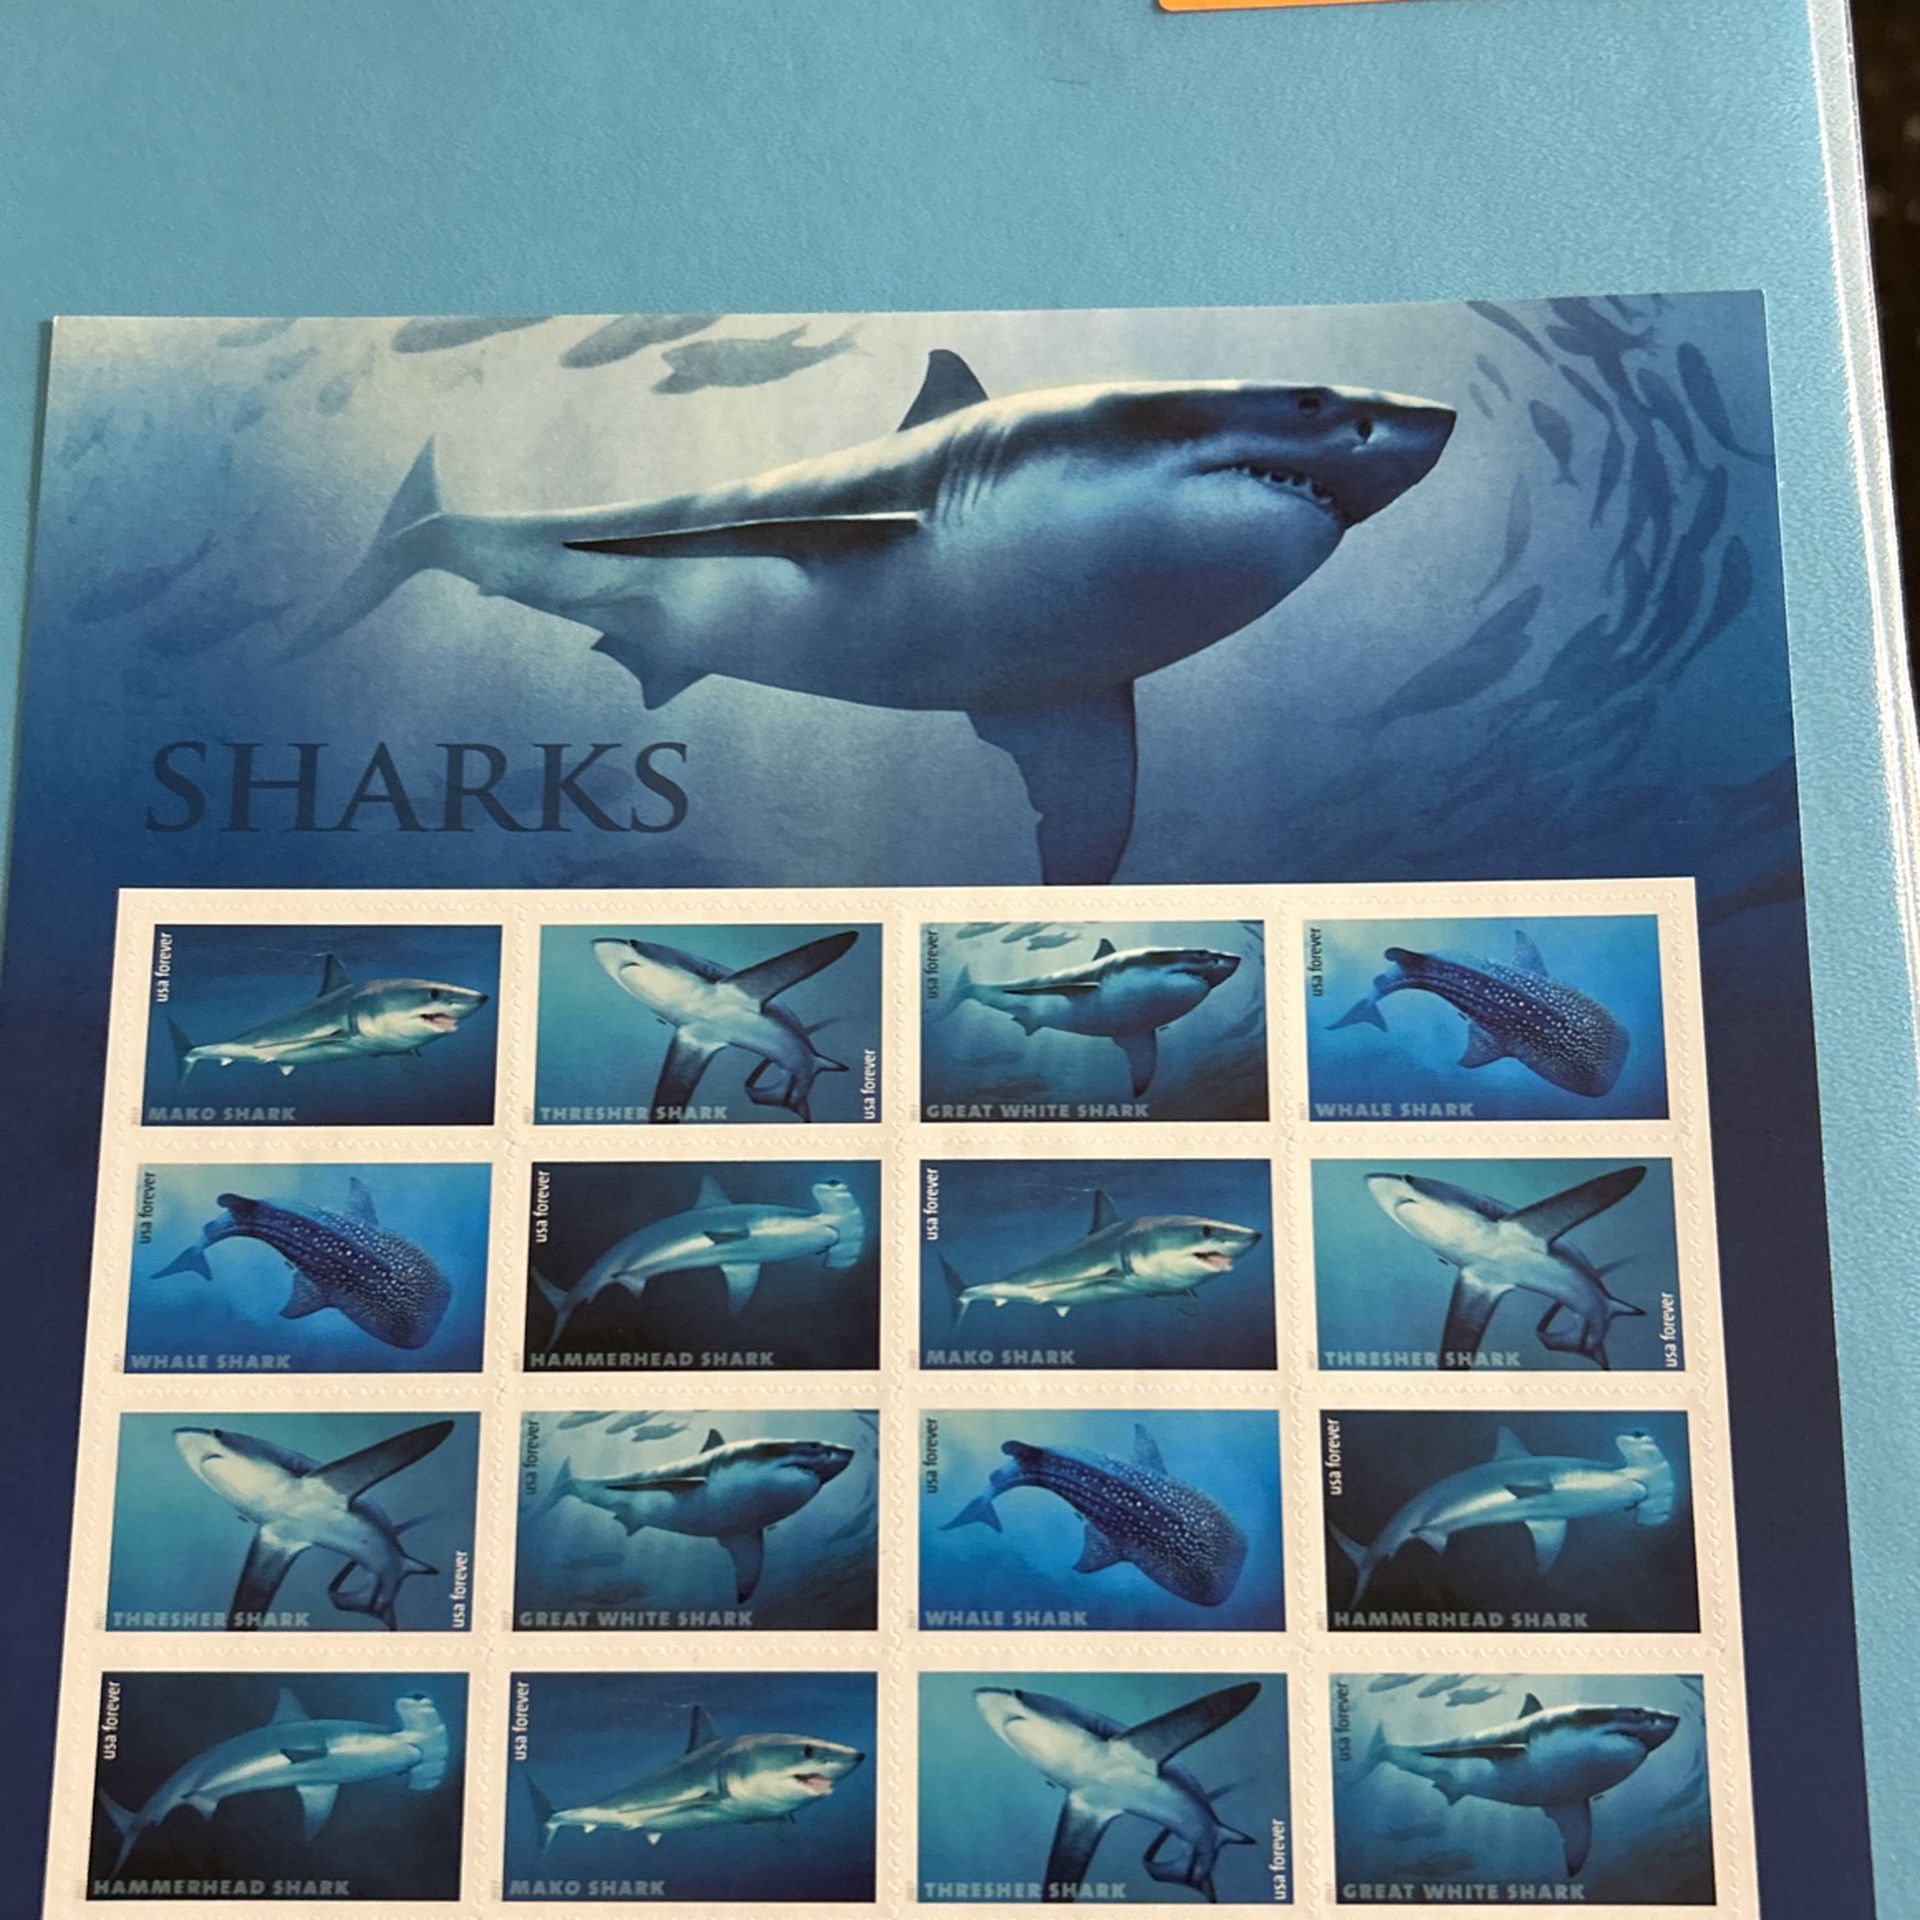 2017  SHARKS STAMP SHEET -- USA #5223-#5227 Forever Stamps.  OCEAN CREATURES